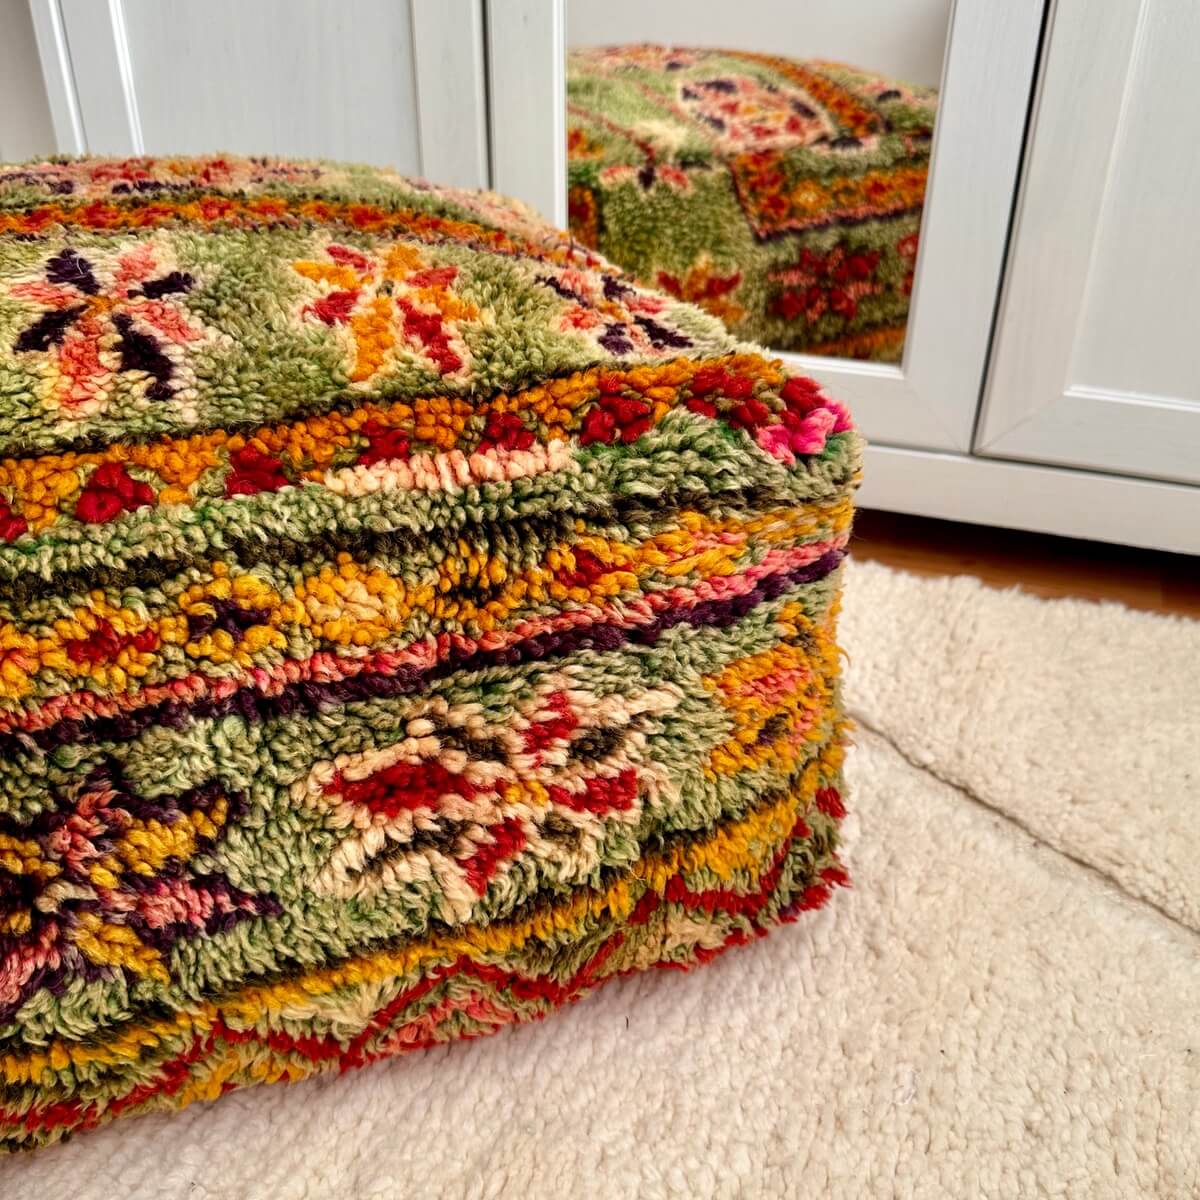 perna de podea autentic marocana realizata dintr-un covor vintage din lana predominant verde